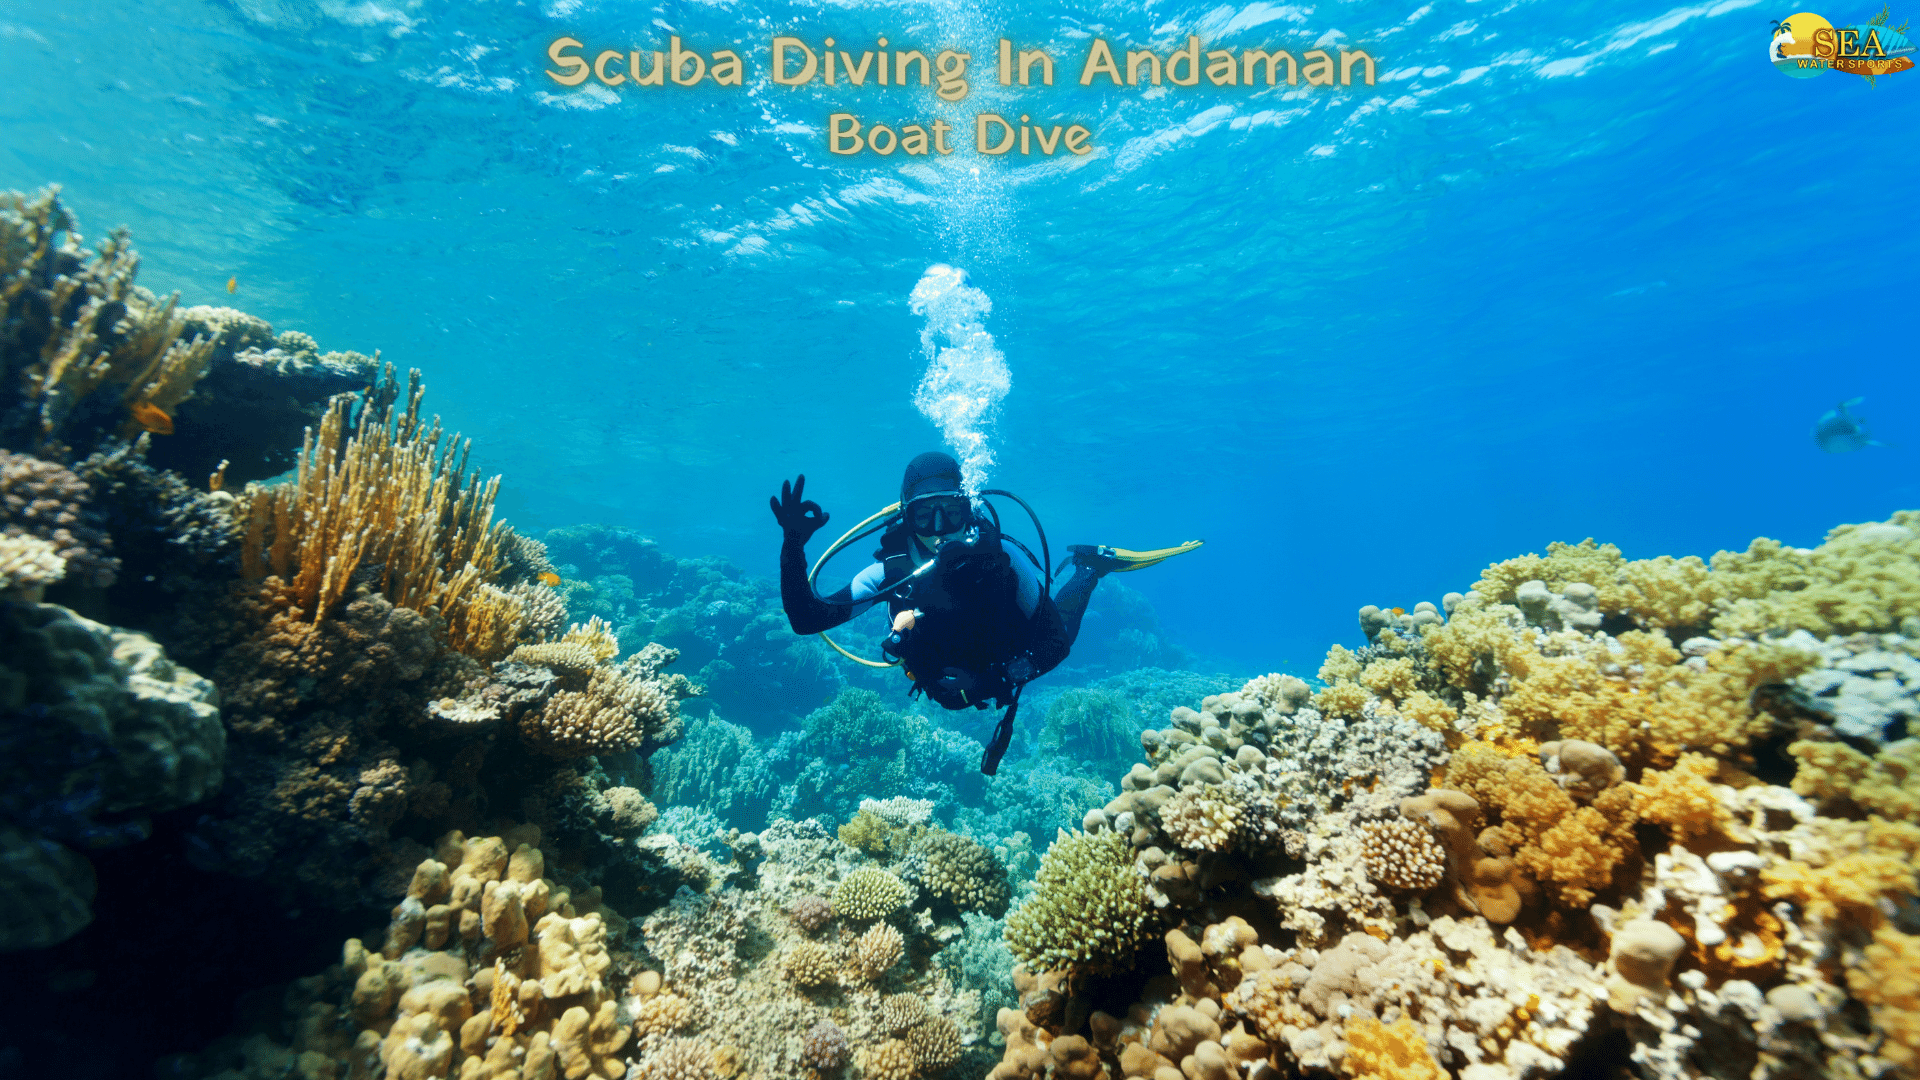 Scuba Diving in Andaman Boat Dive, South Andaman, Andaman and Nicobar, India